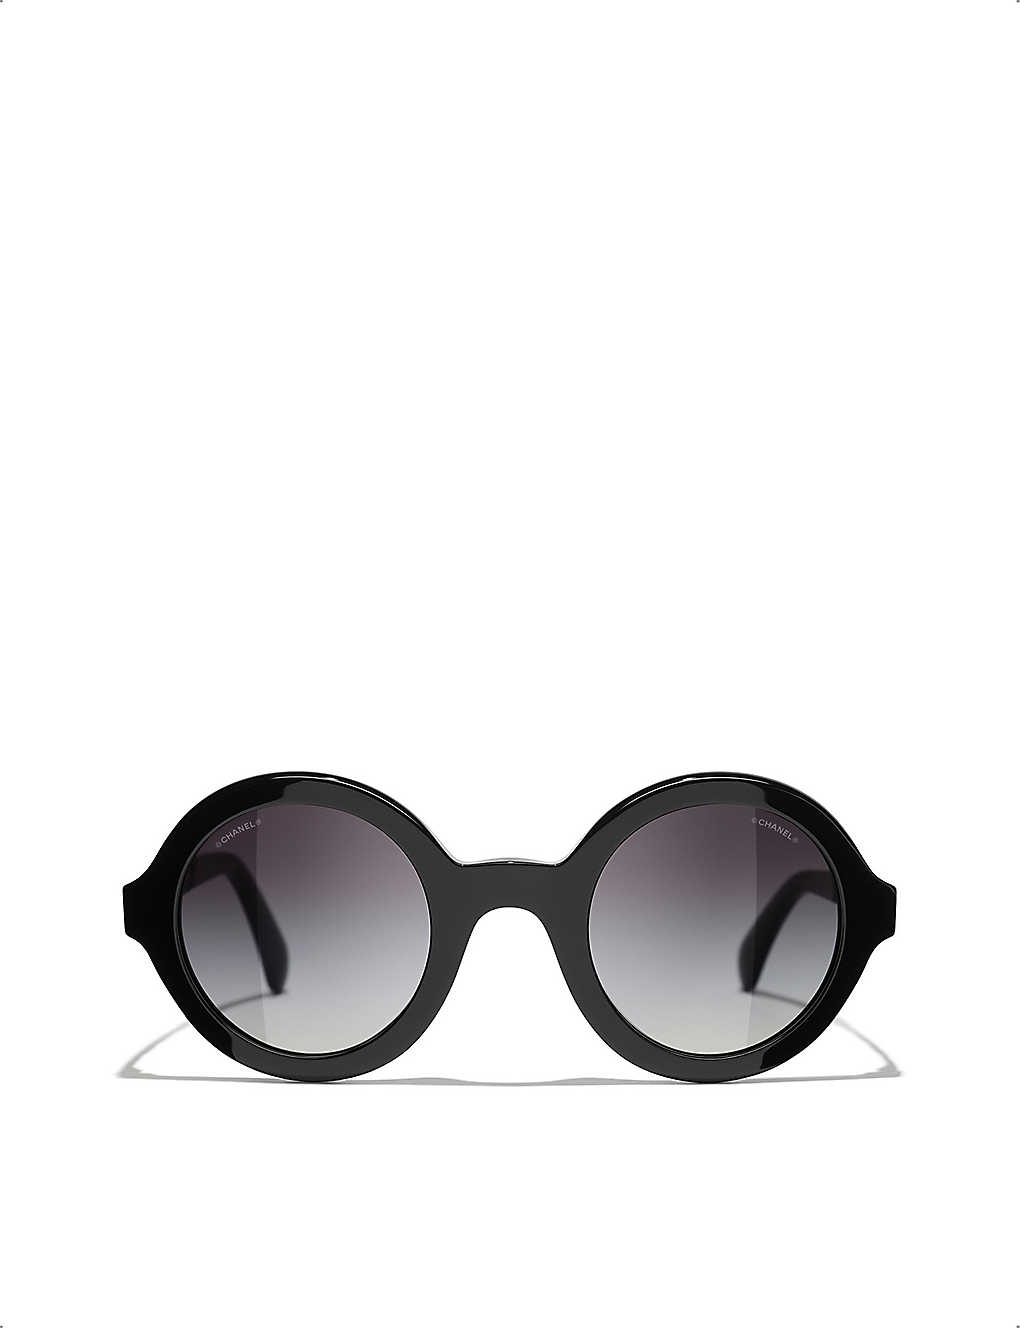 CHANEL - Round Sunglasses